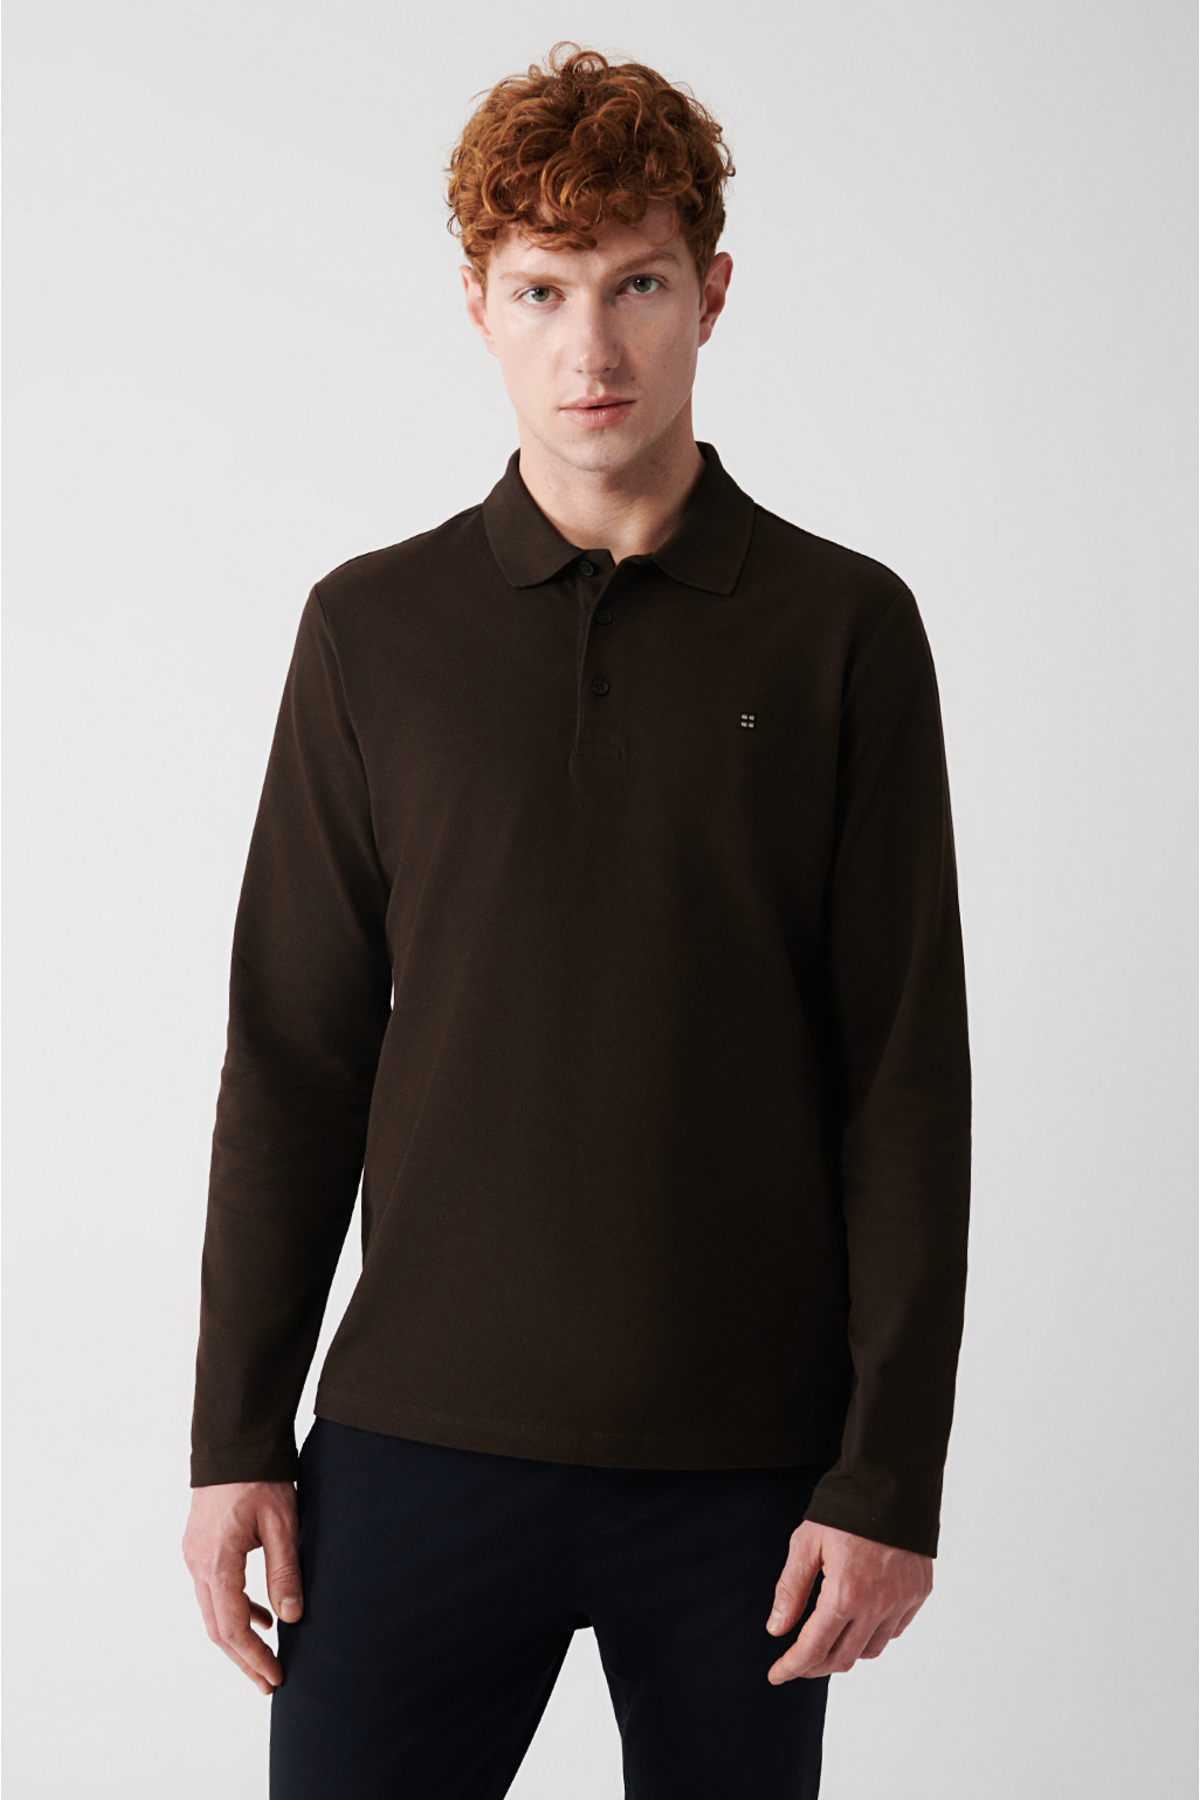 Avva Men's Brown Sweatshirt 3 Buttons Polo Neck 100% Cotton Basic Regular Fit